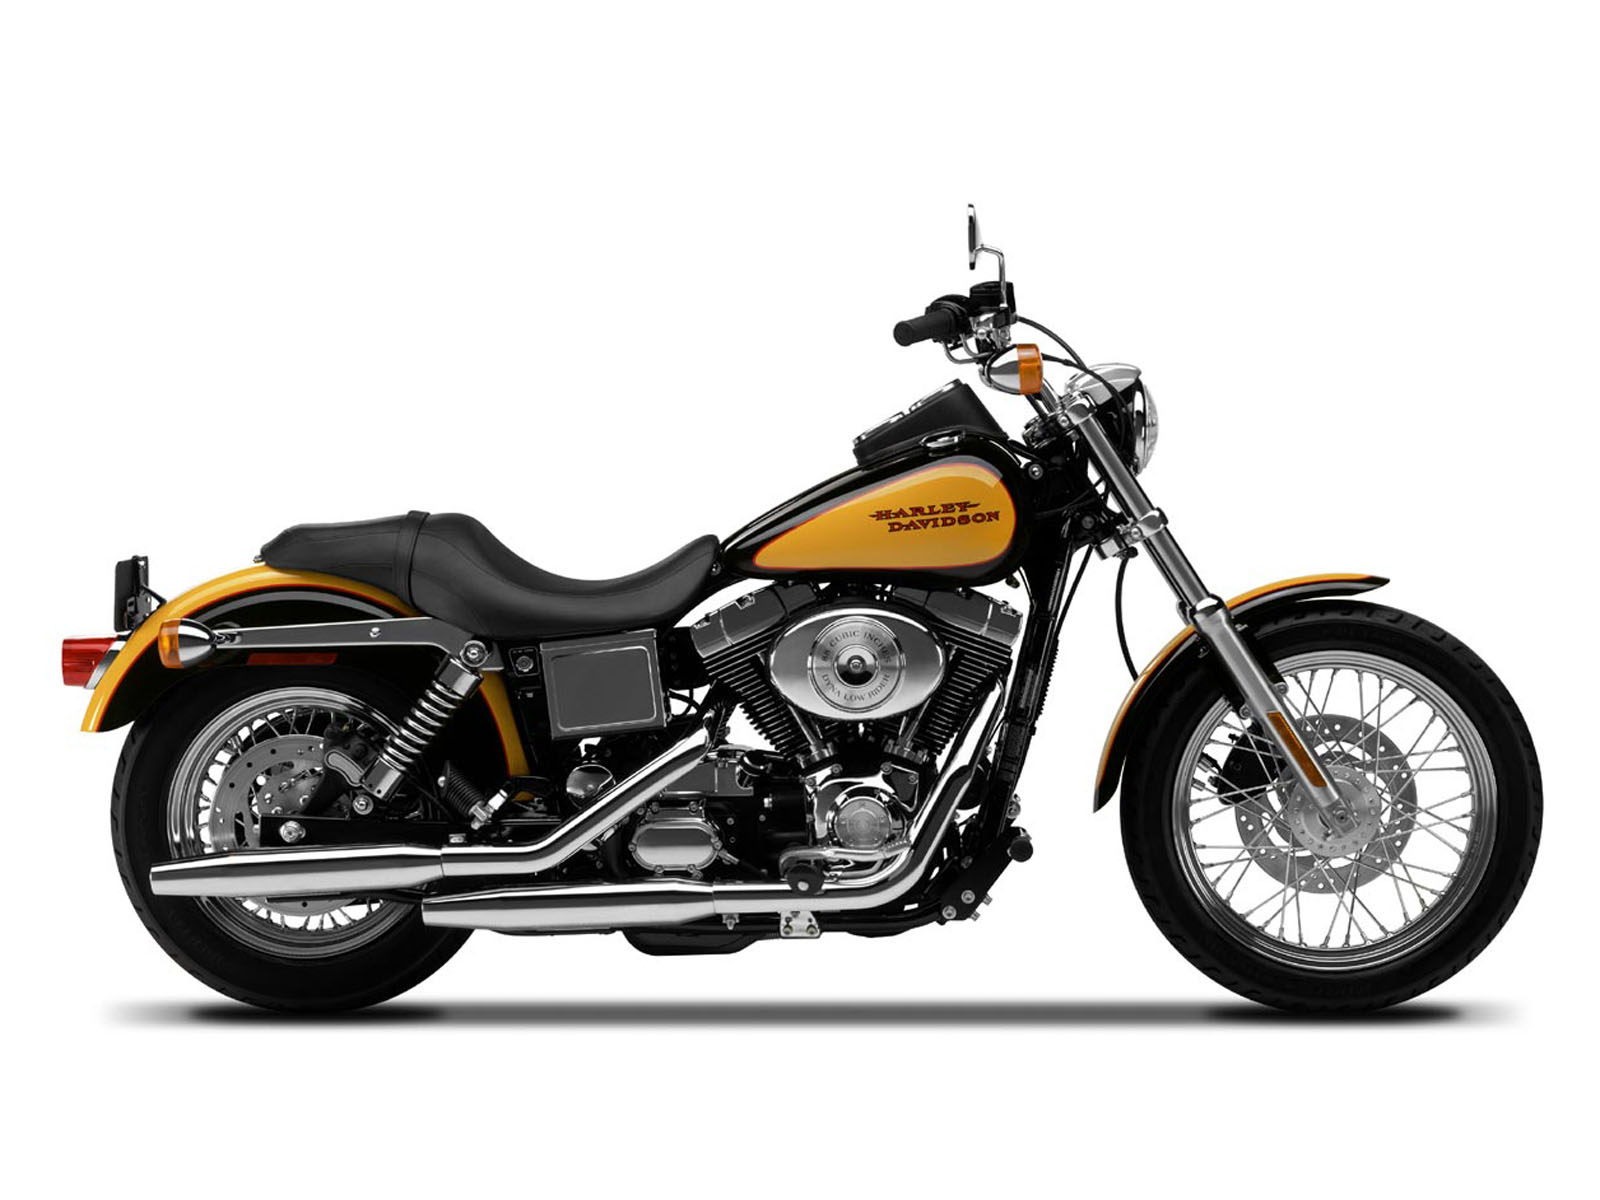 Wallpaper American Harley Davidson Bikes